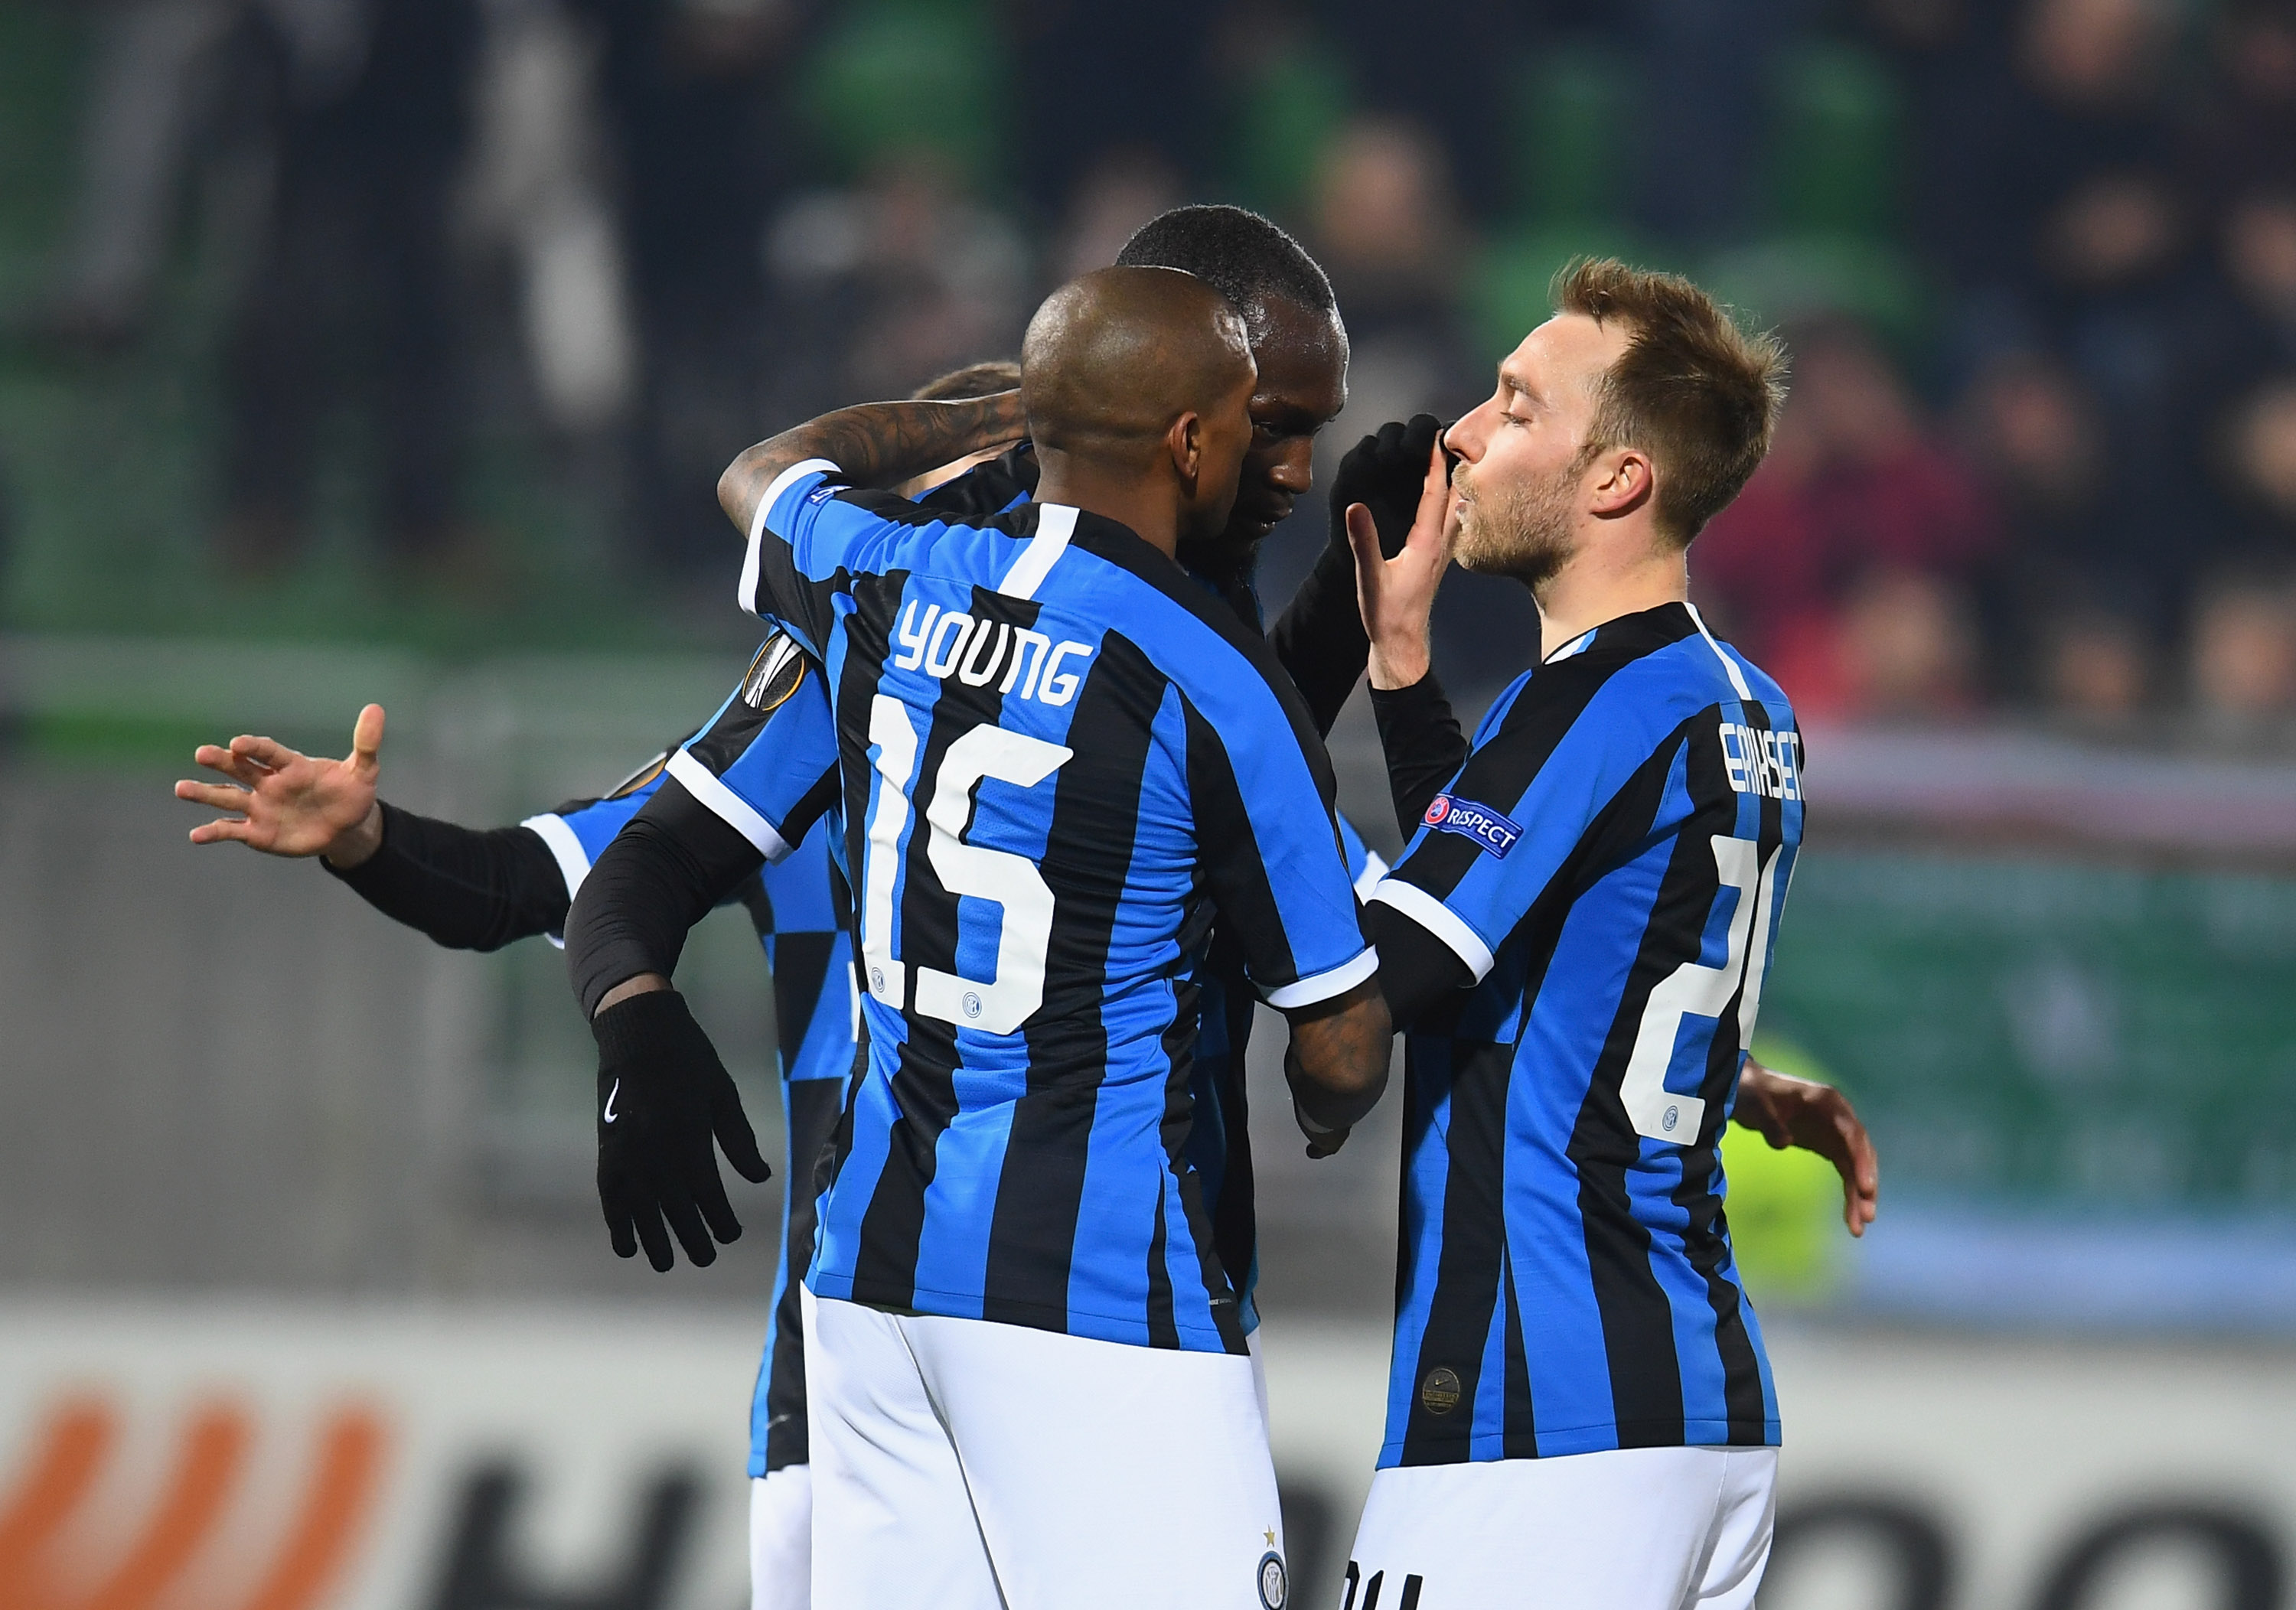 Inter Milan game among three postponed over coronavirus fears in Italy